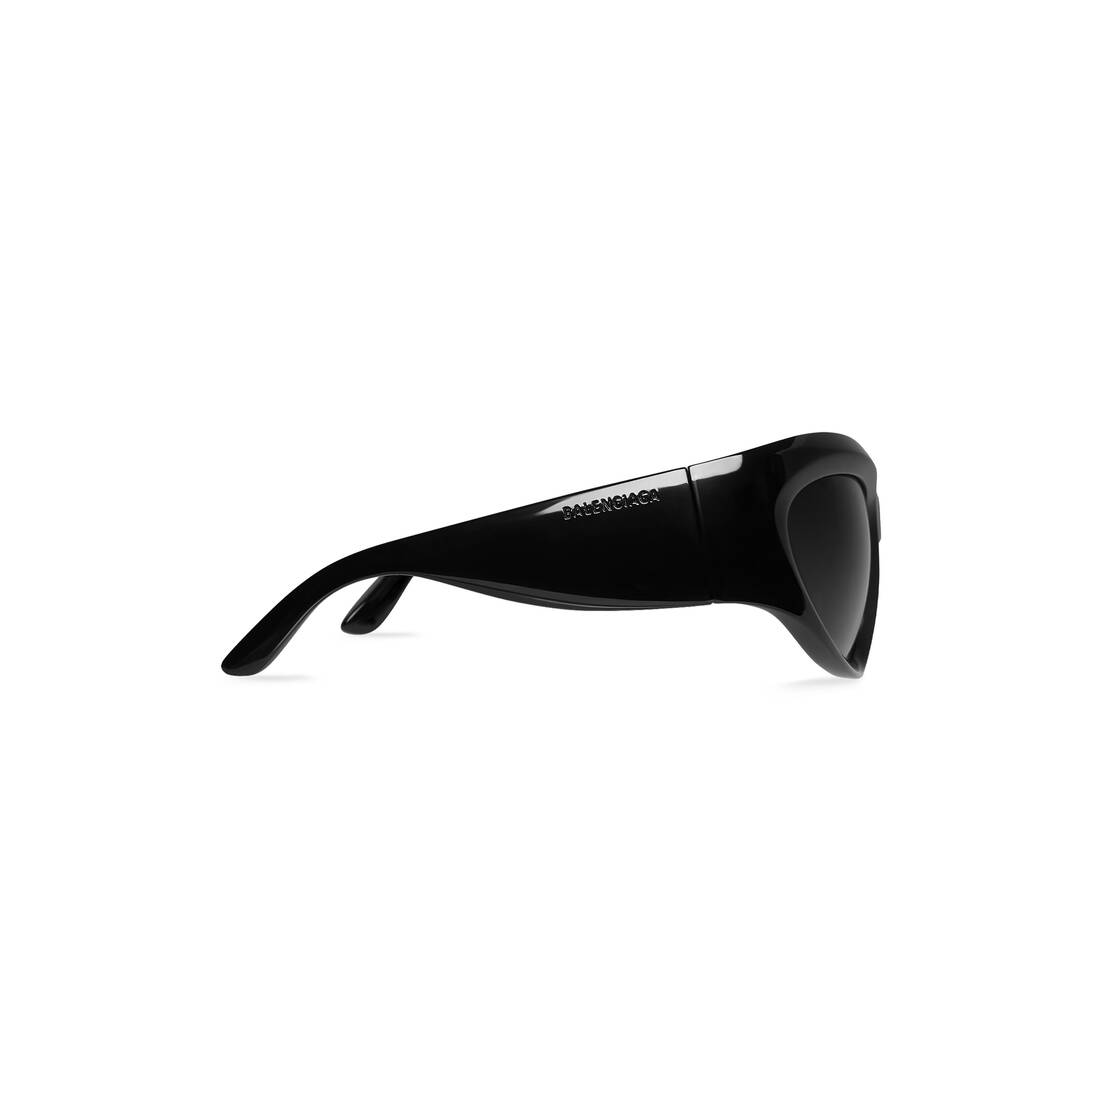 Balenciaga bold wrap around black sunglasses